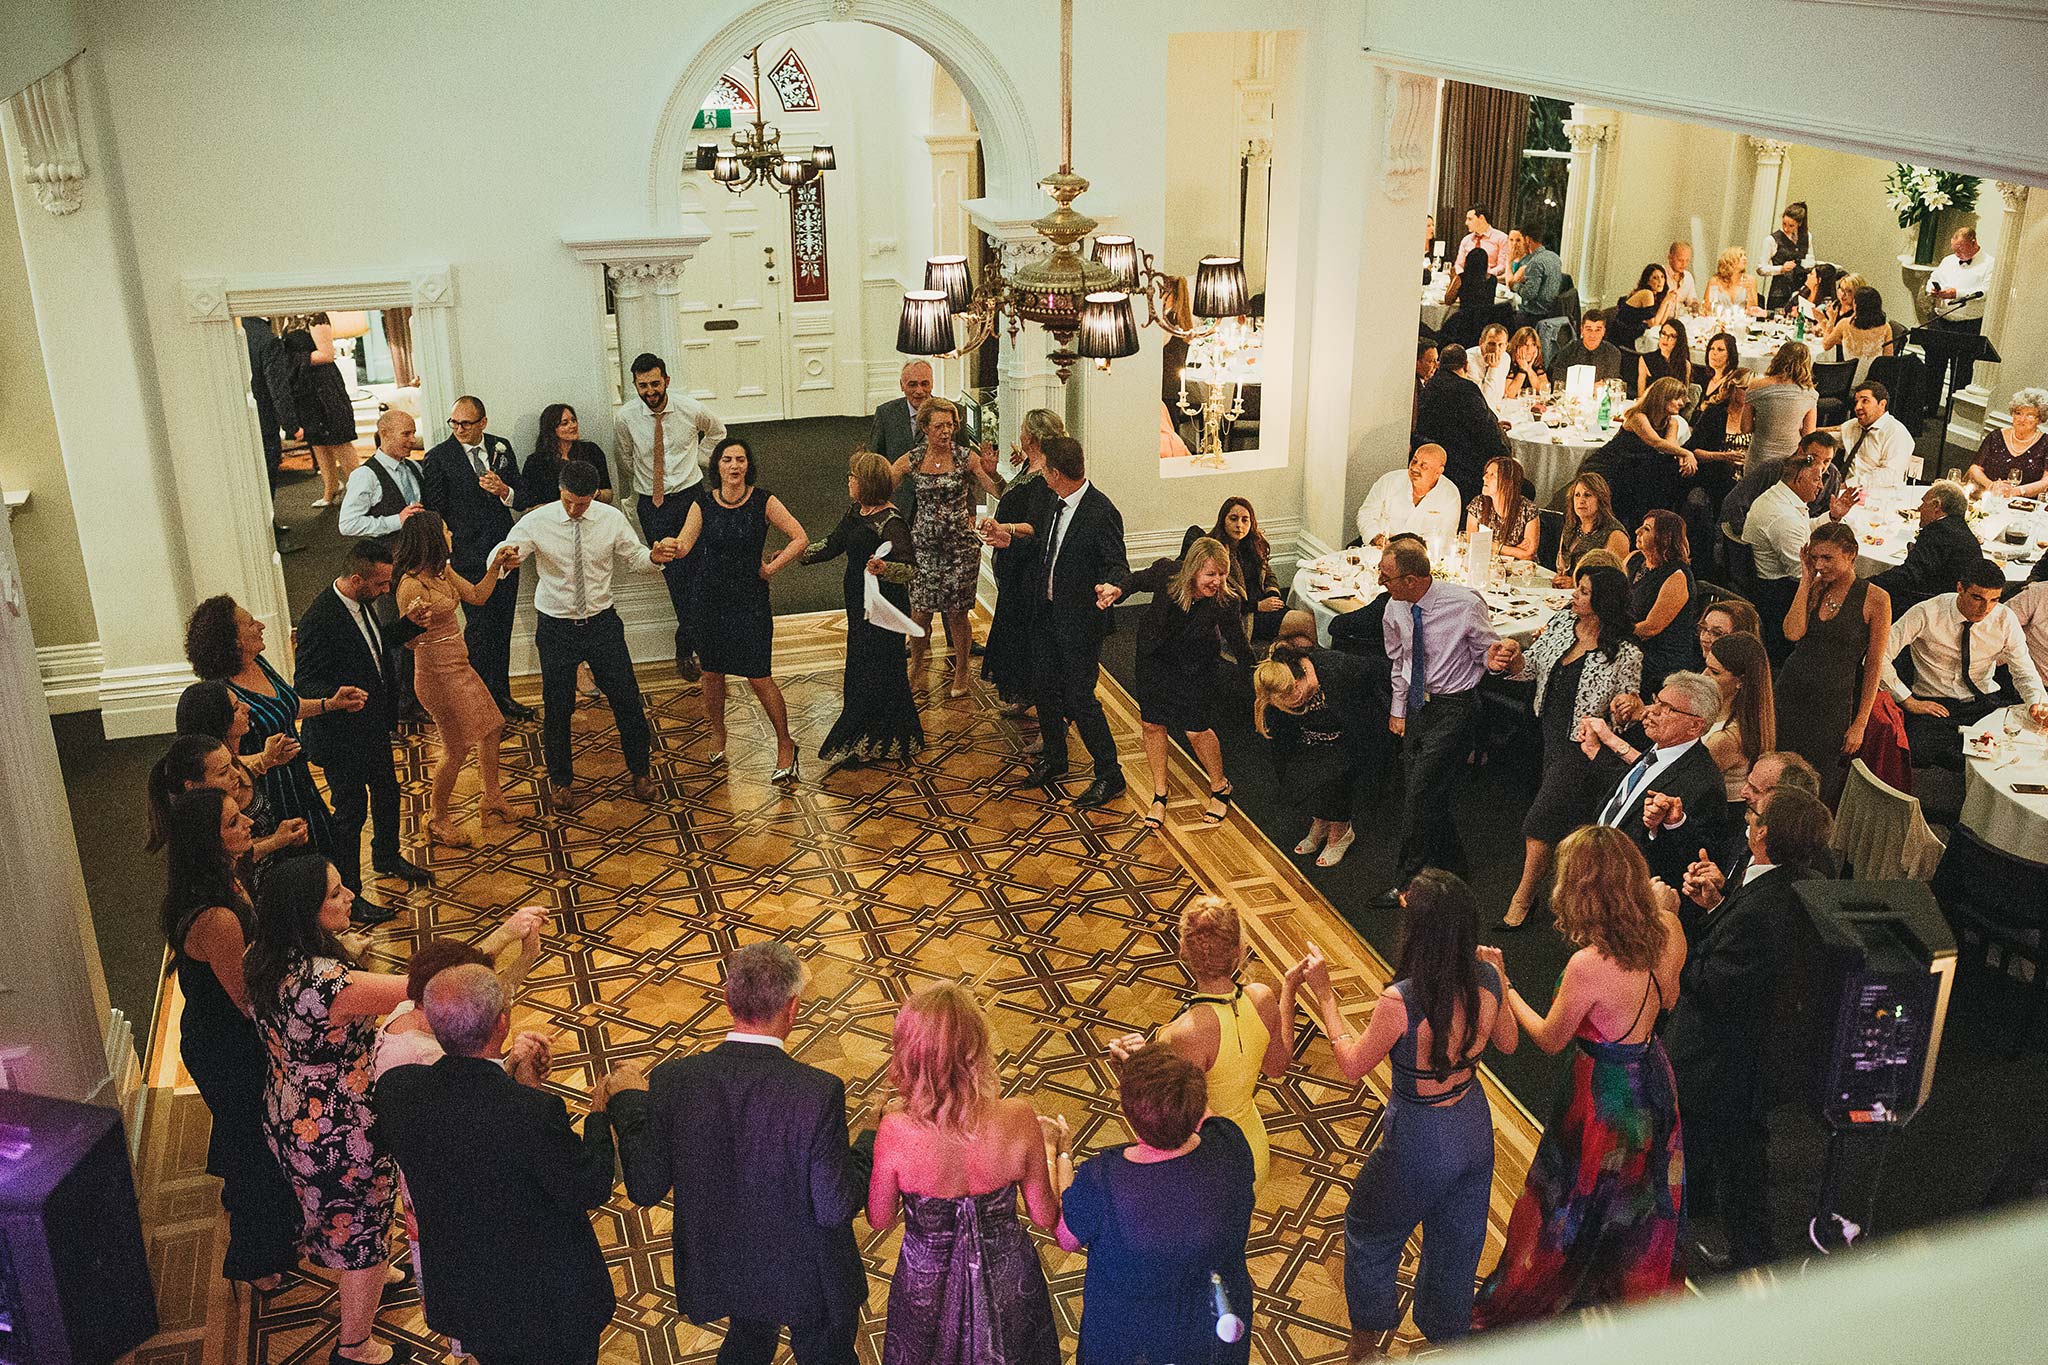 quat-quatta-night-wedding-reception-dance-party